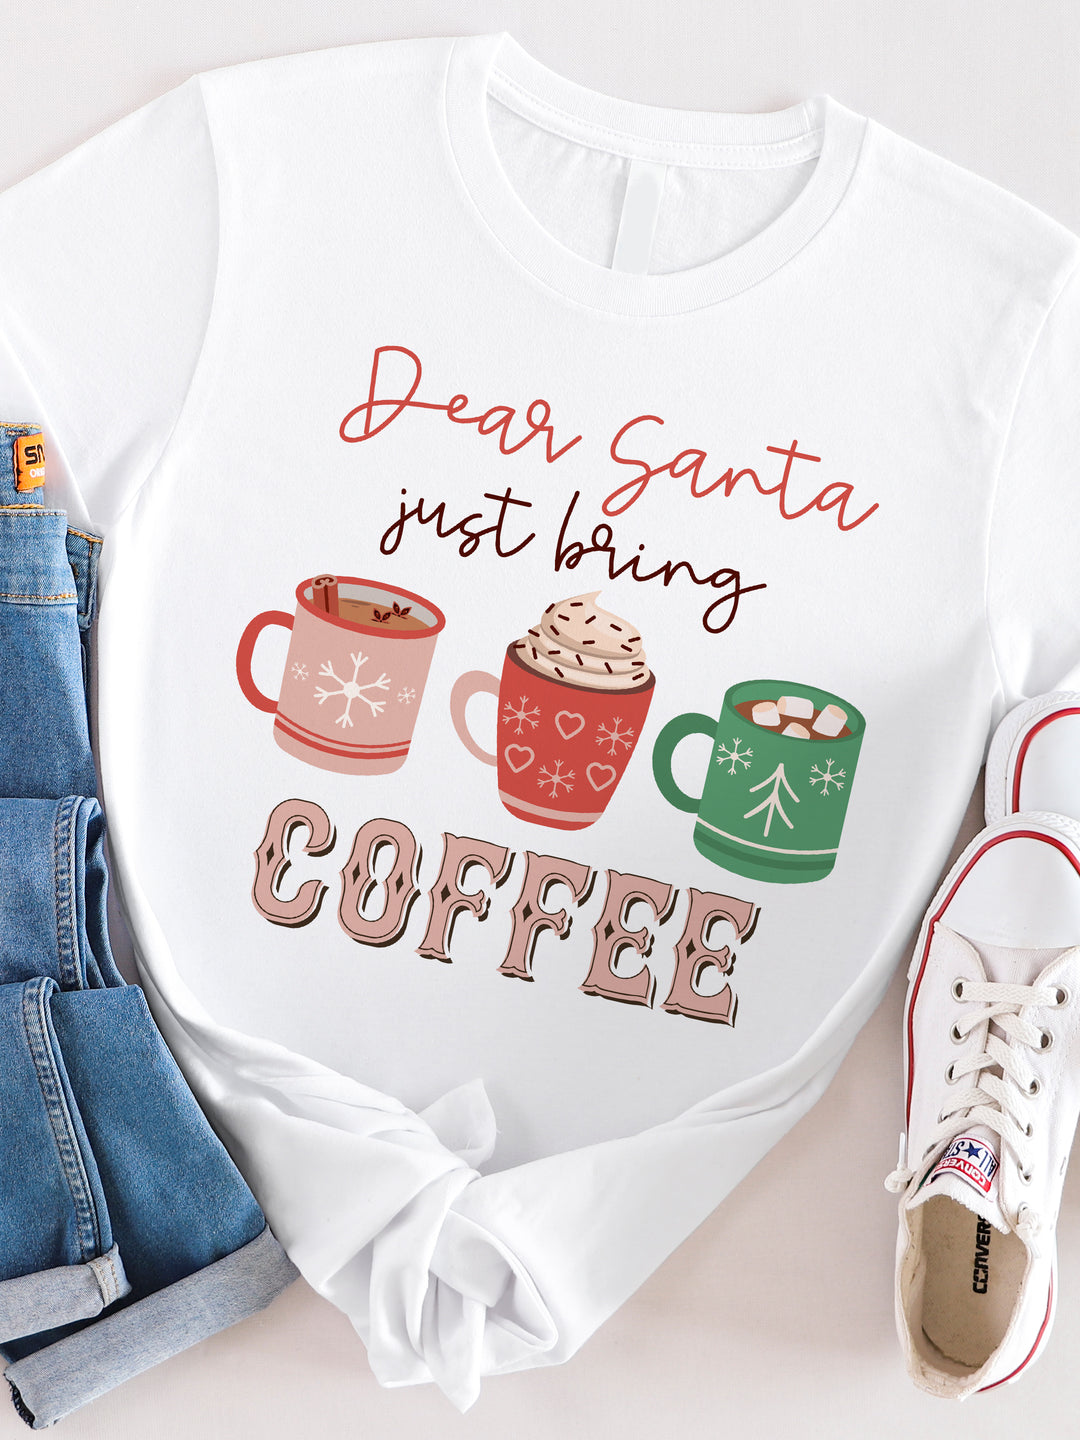 Dear Santa just bring Coffee Graphic Tee